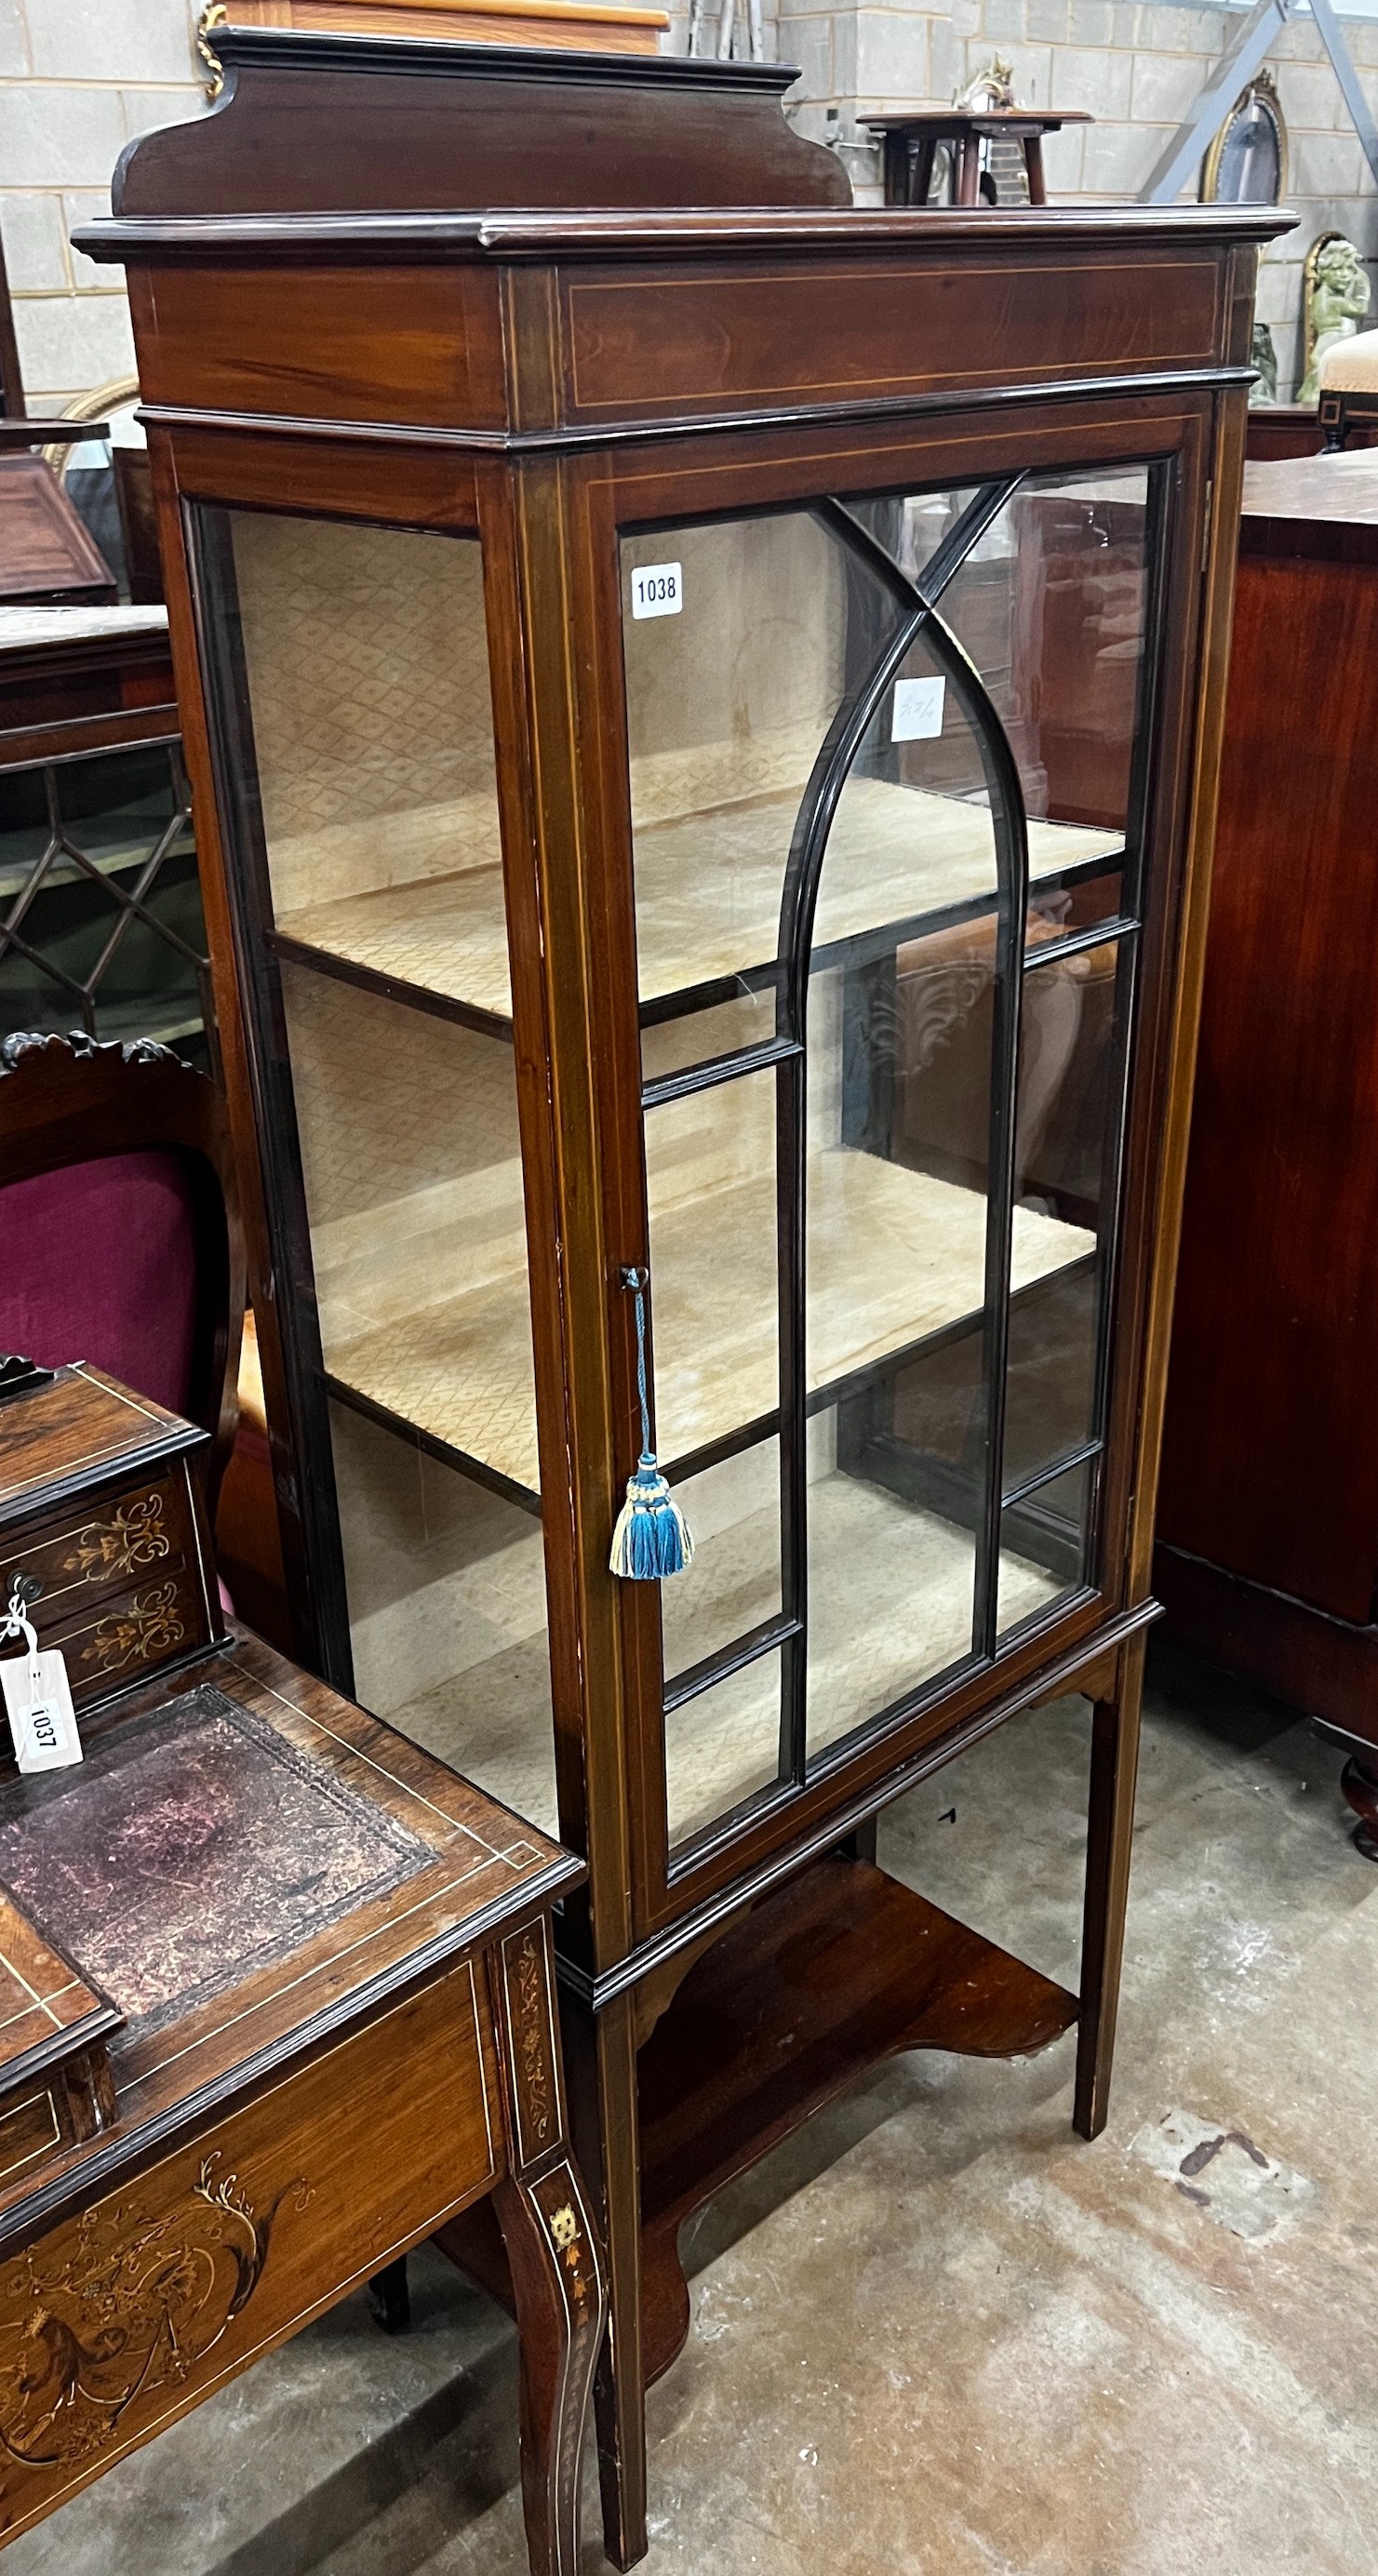 A small Edwardian mahogany display cabinet, width 61cm, depth 33cm, height 160cm